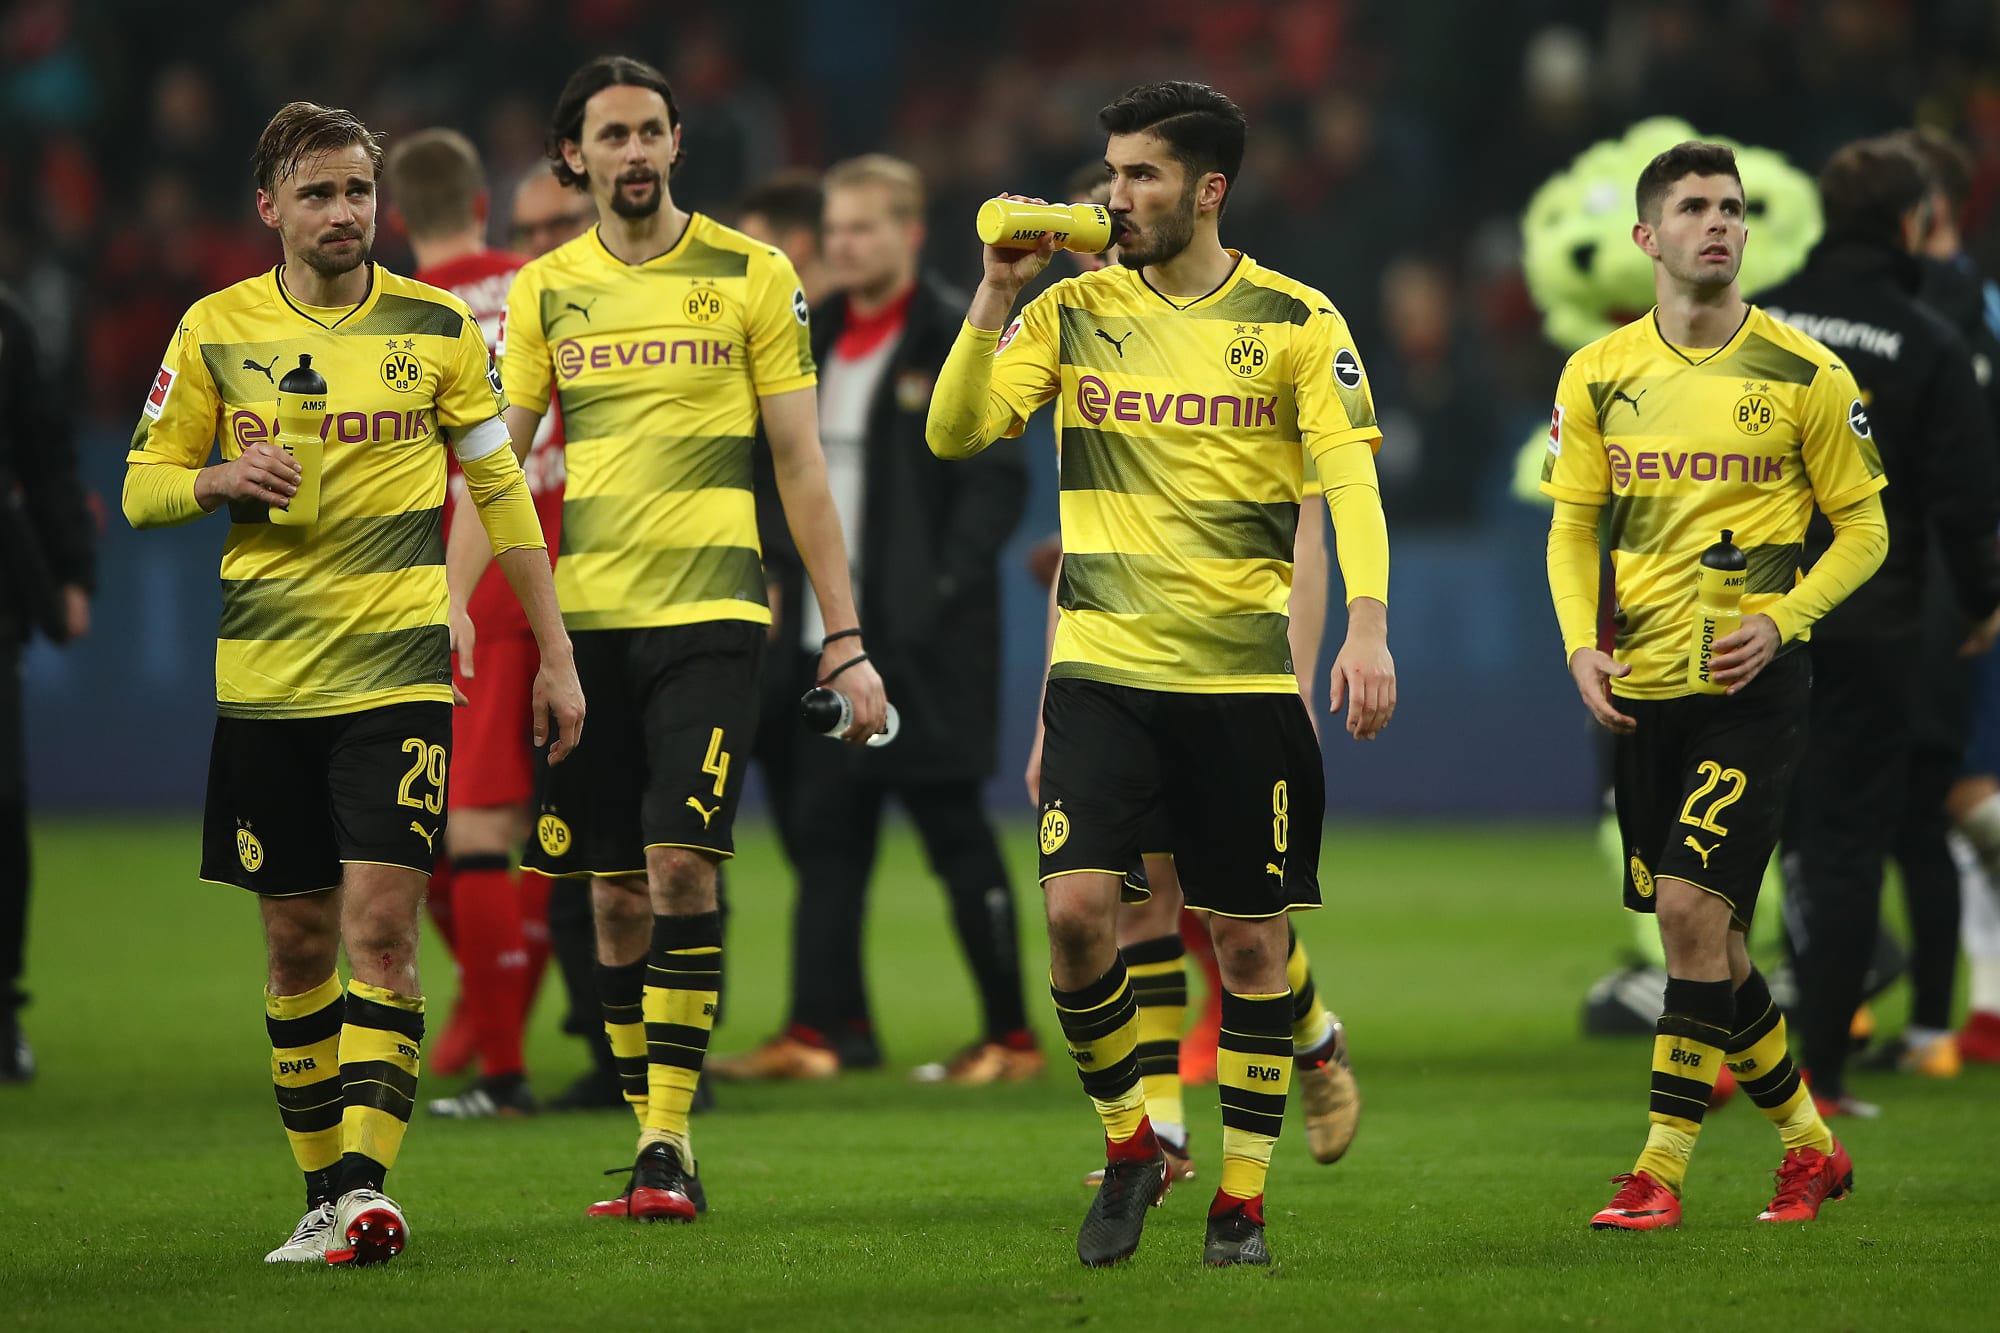 Bayer Leverkusen 1-1 Borussia Dortmund: Player Ratings